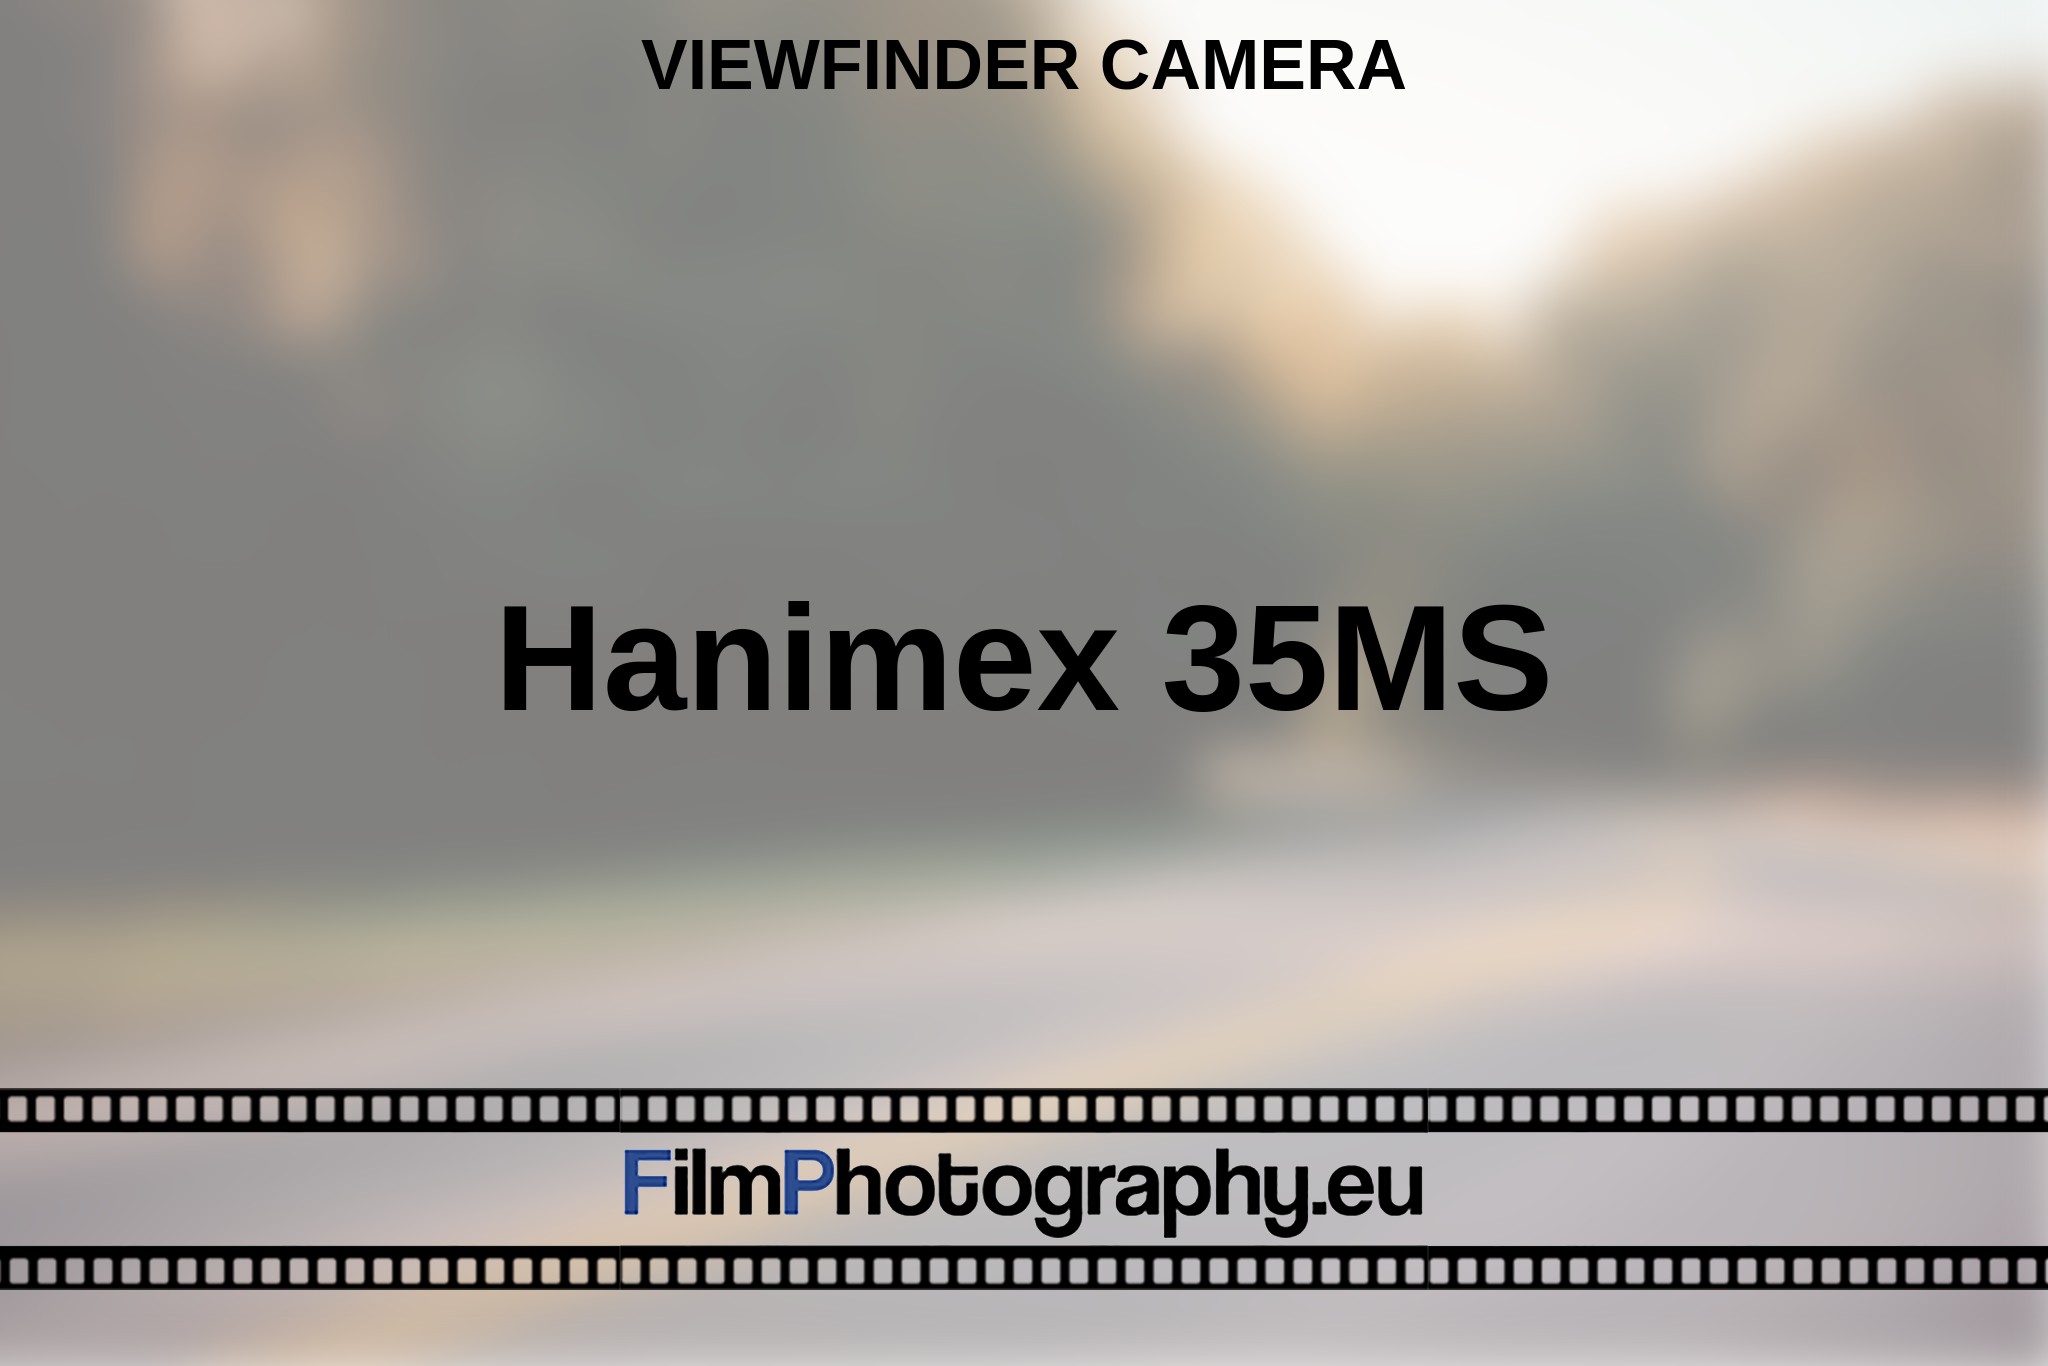 hanimex-35ms-viewfinder-camera-en-bnv.jpg